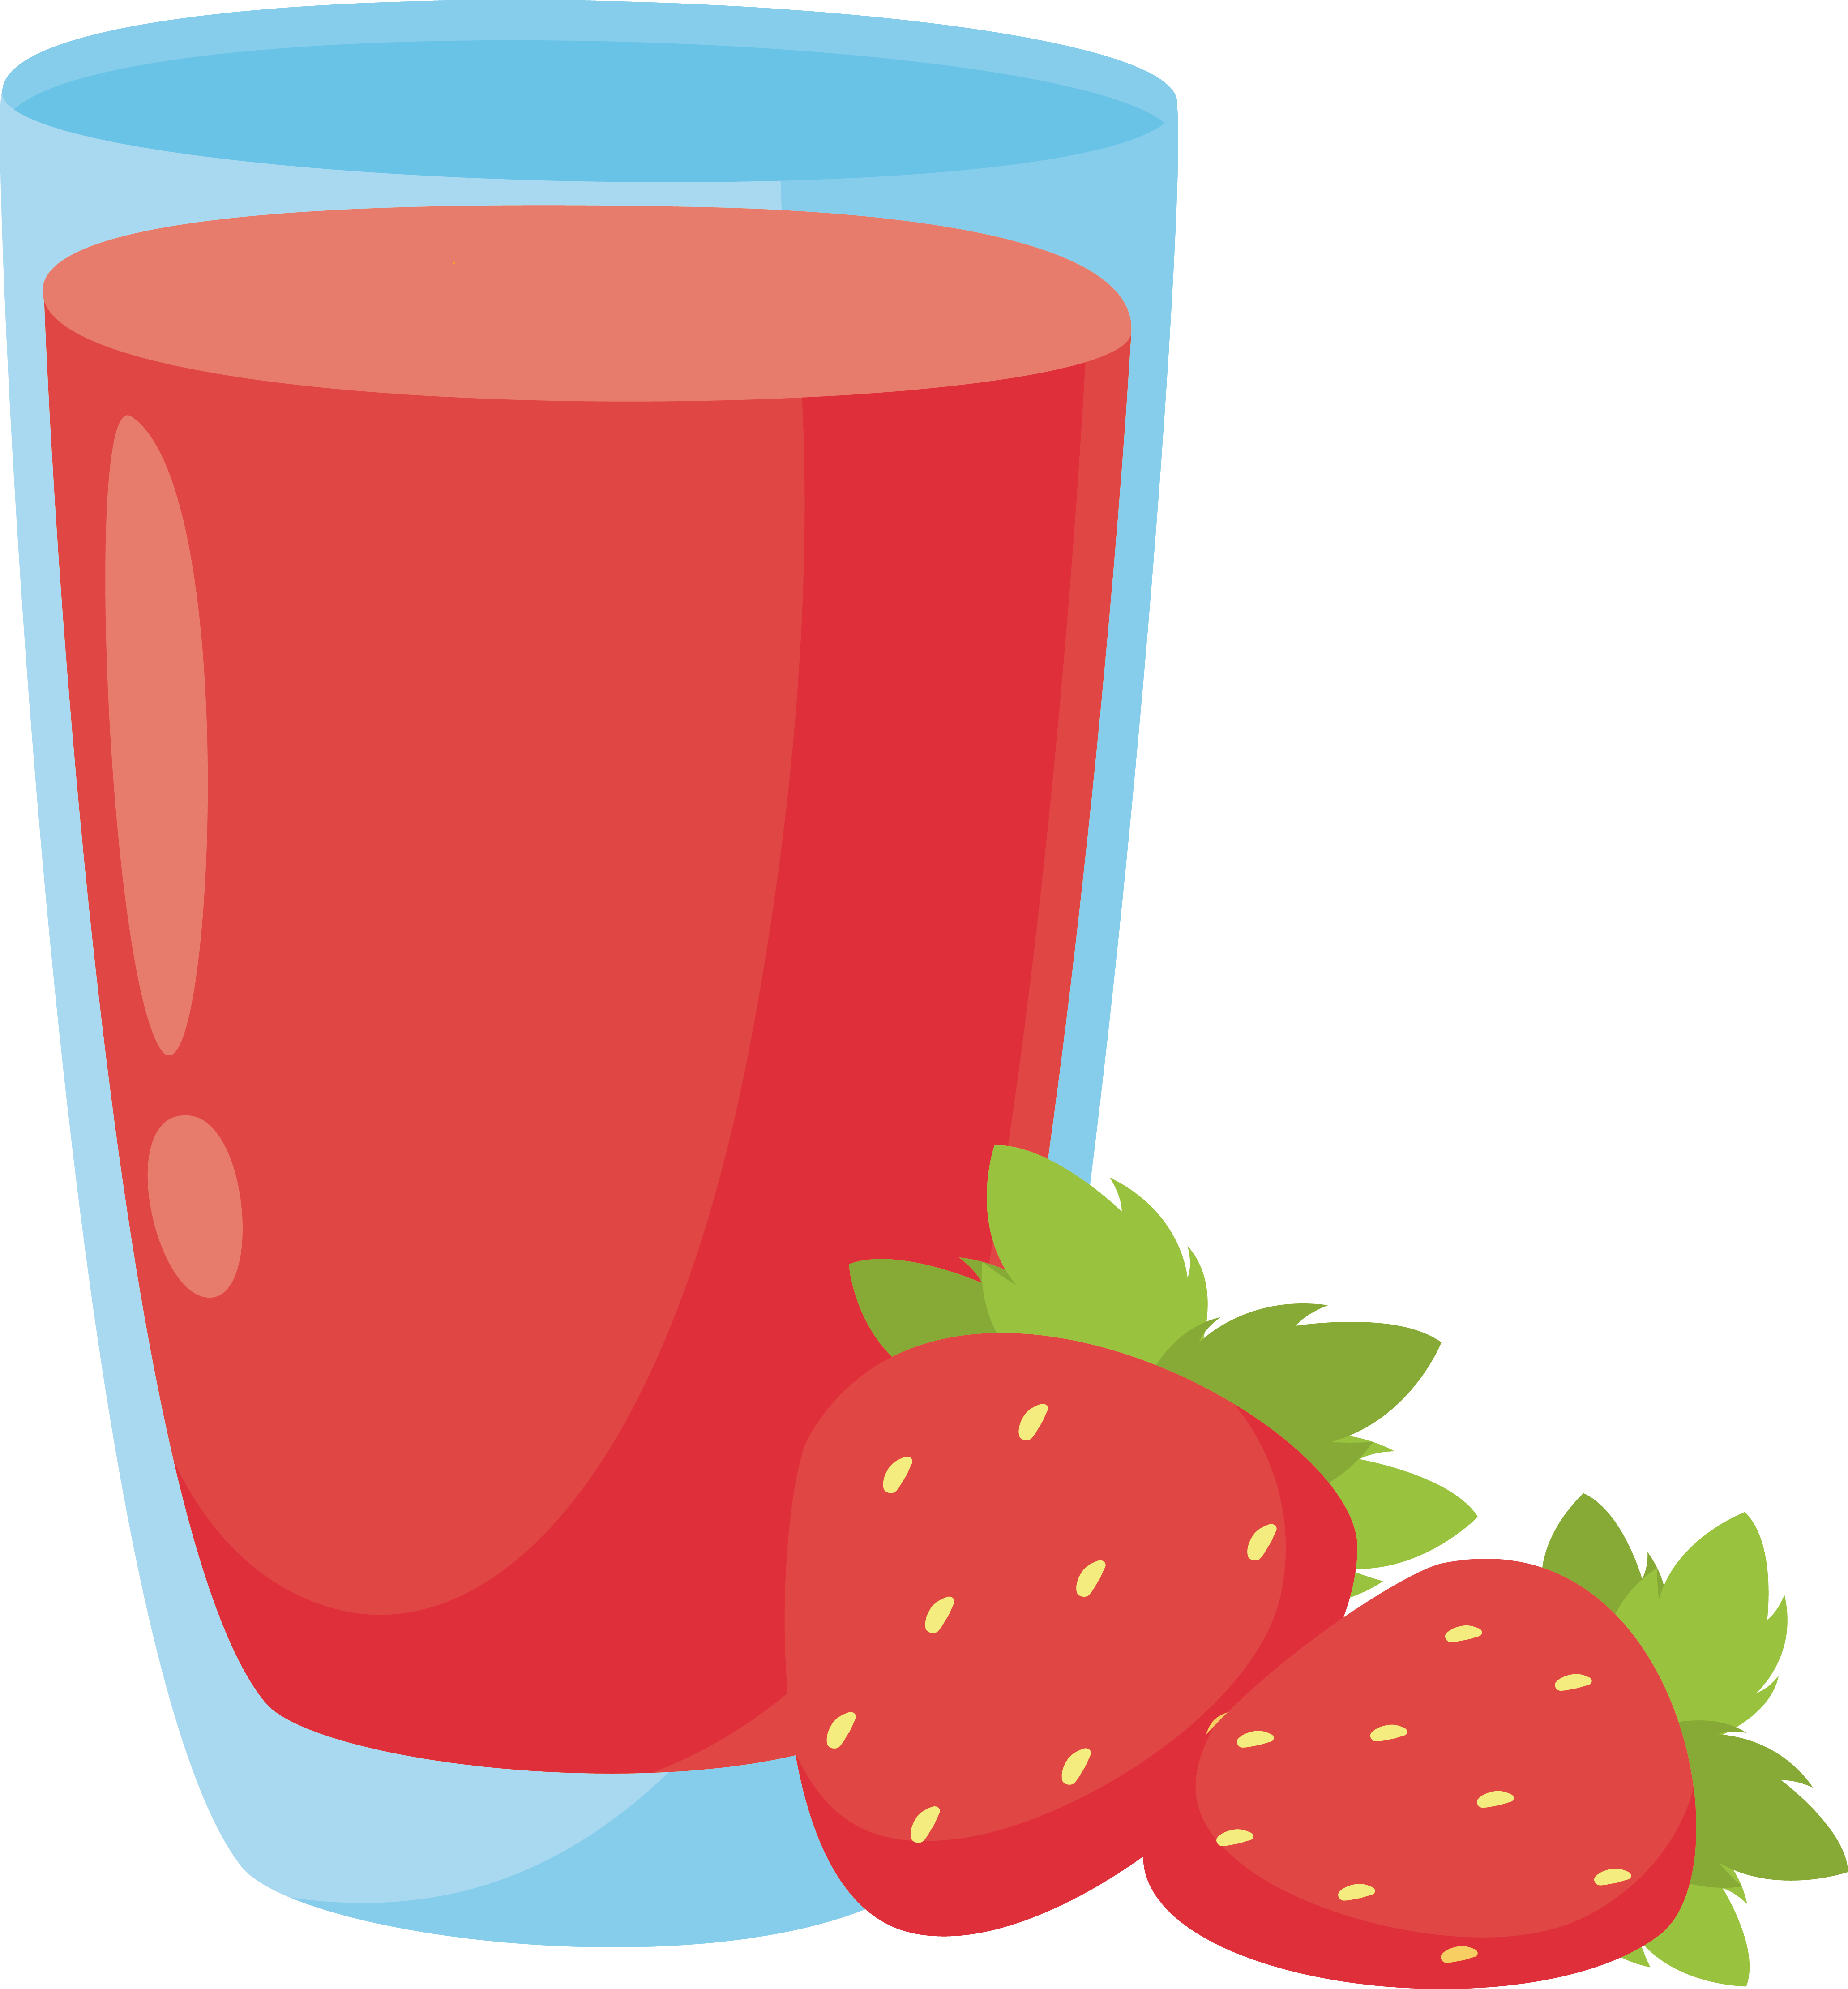 Orange strawberry apple design. Cookies clipart juice